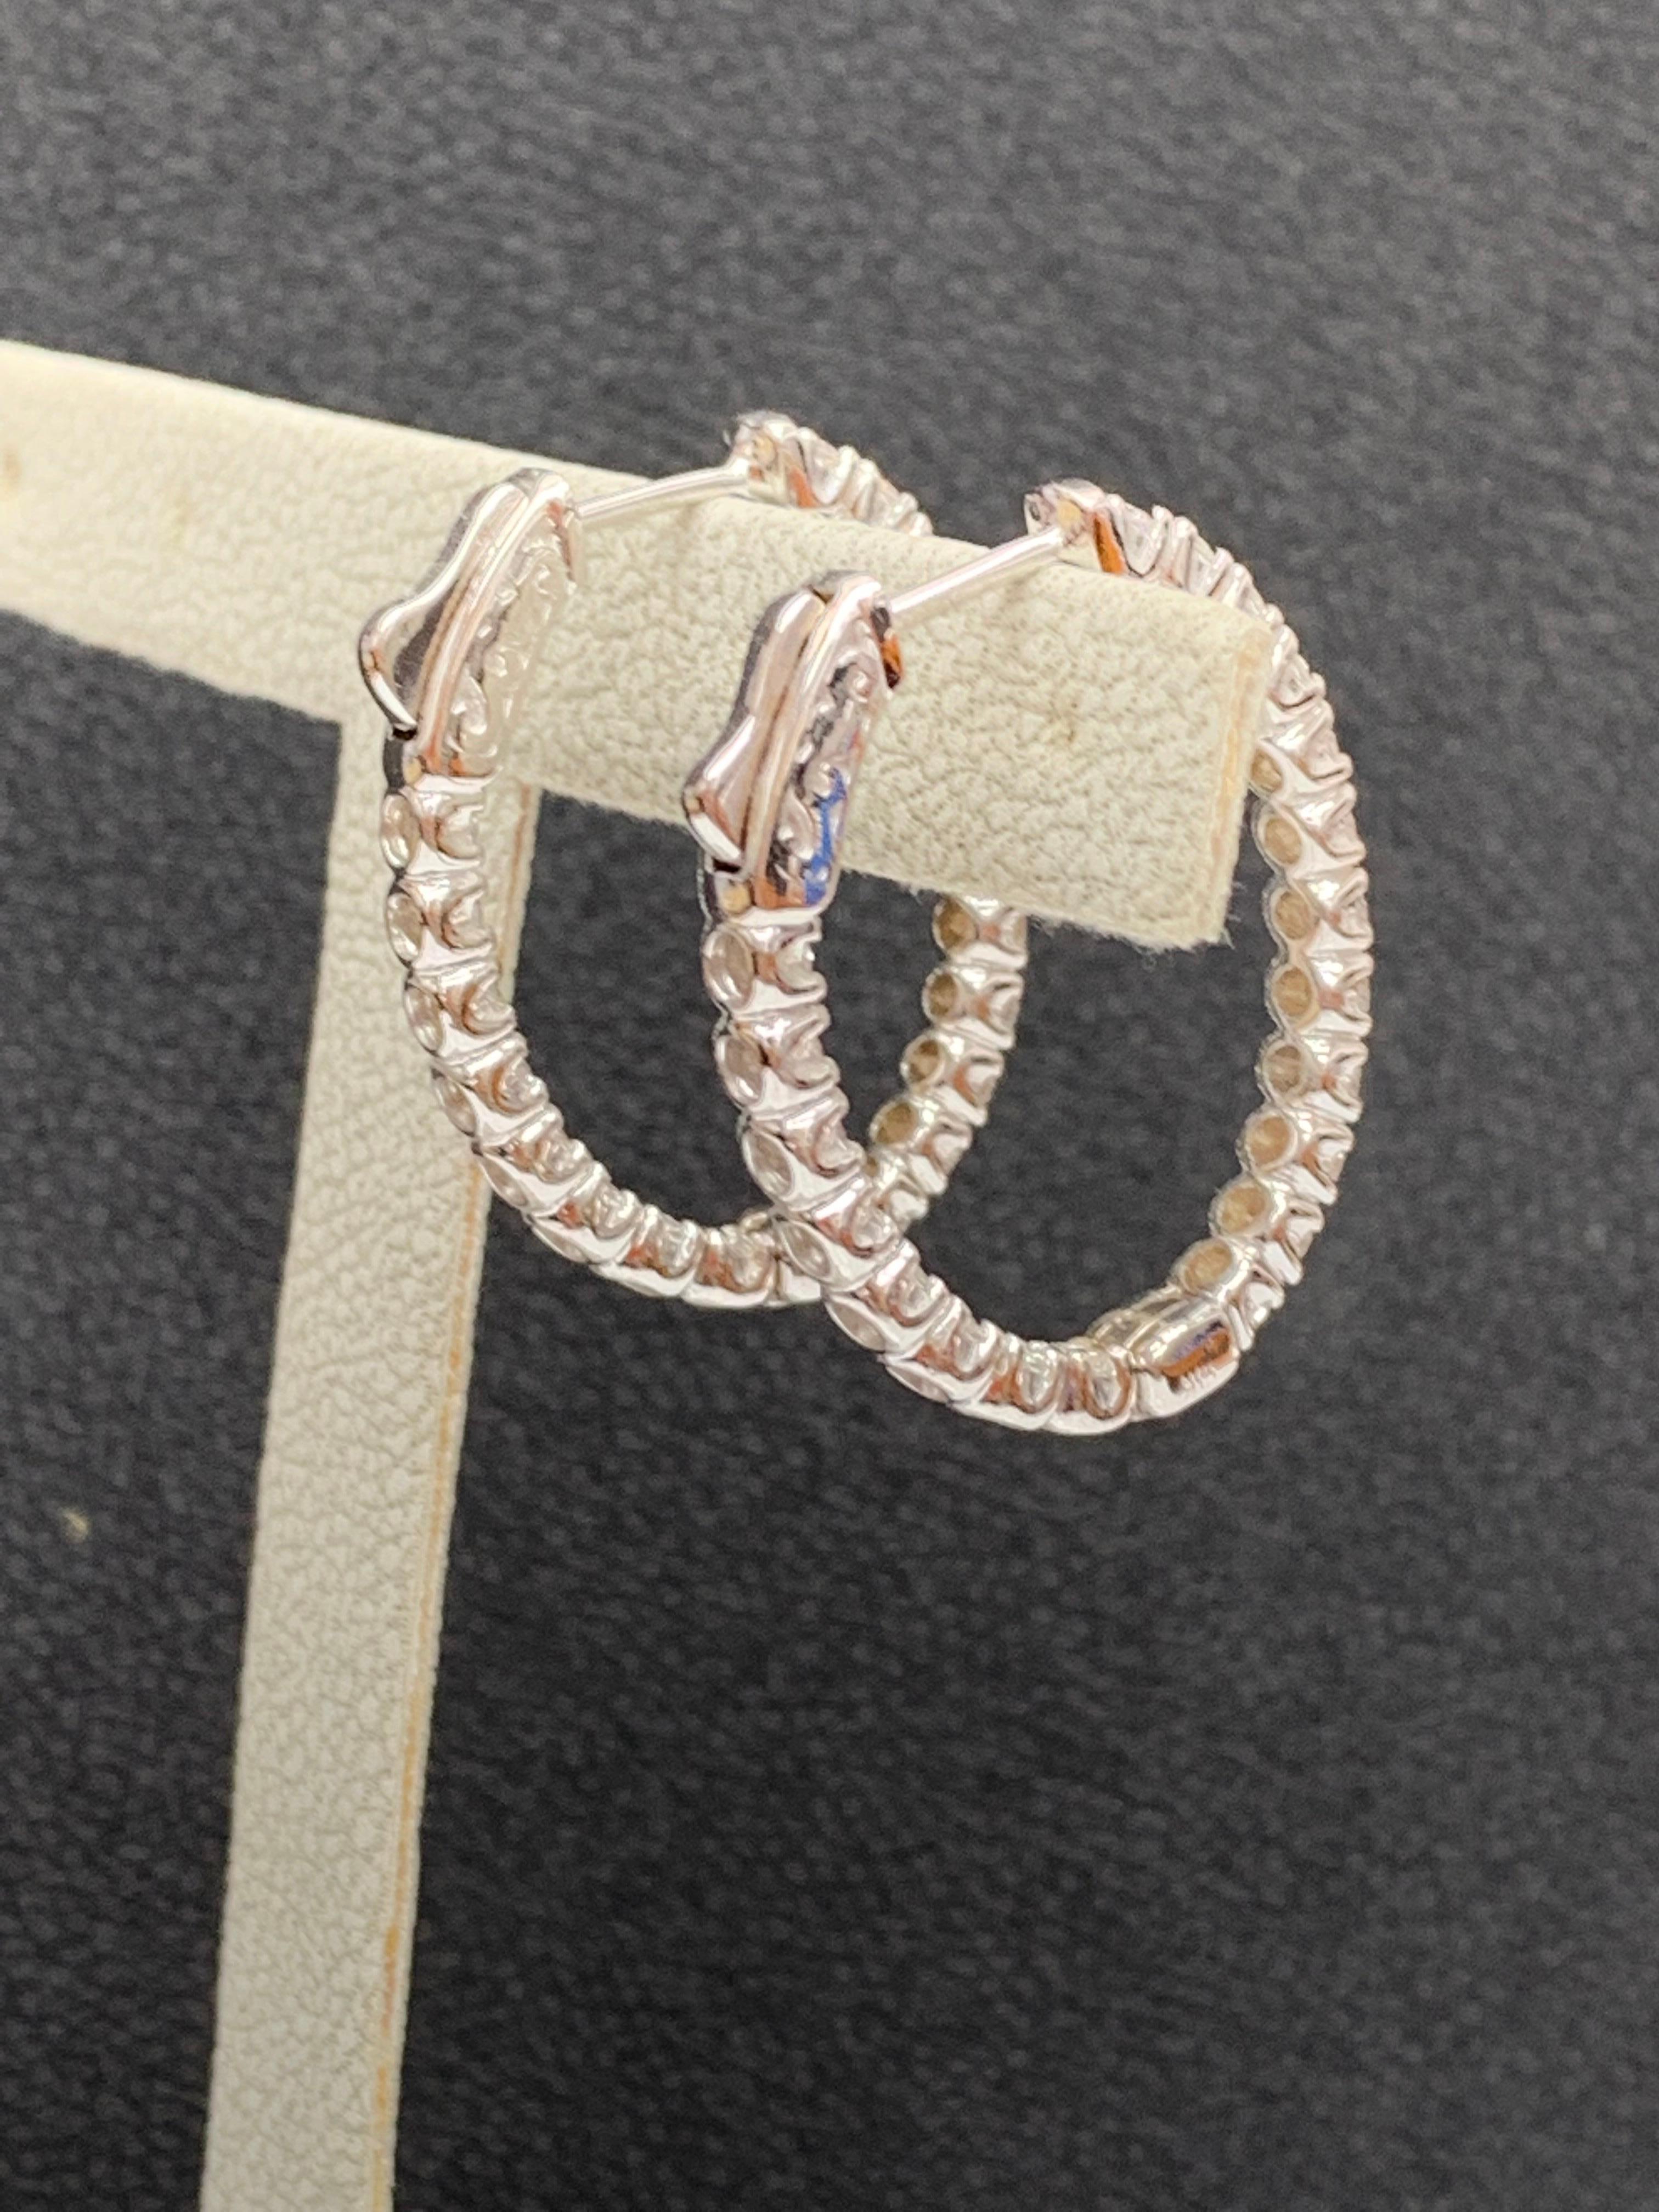 Modern 2 Carat Round Cut Diamond Hoop Earrings in 14k White Gold For Sale